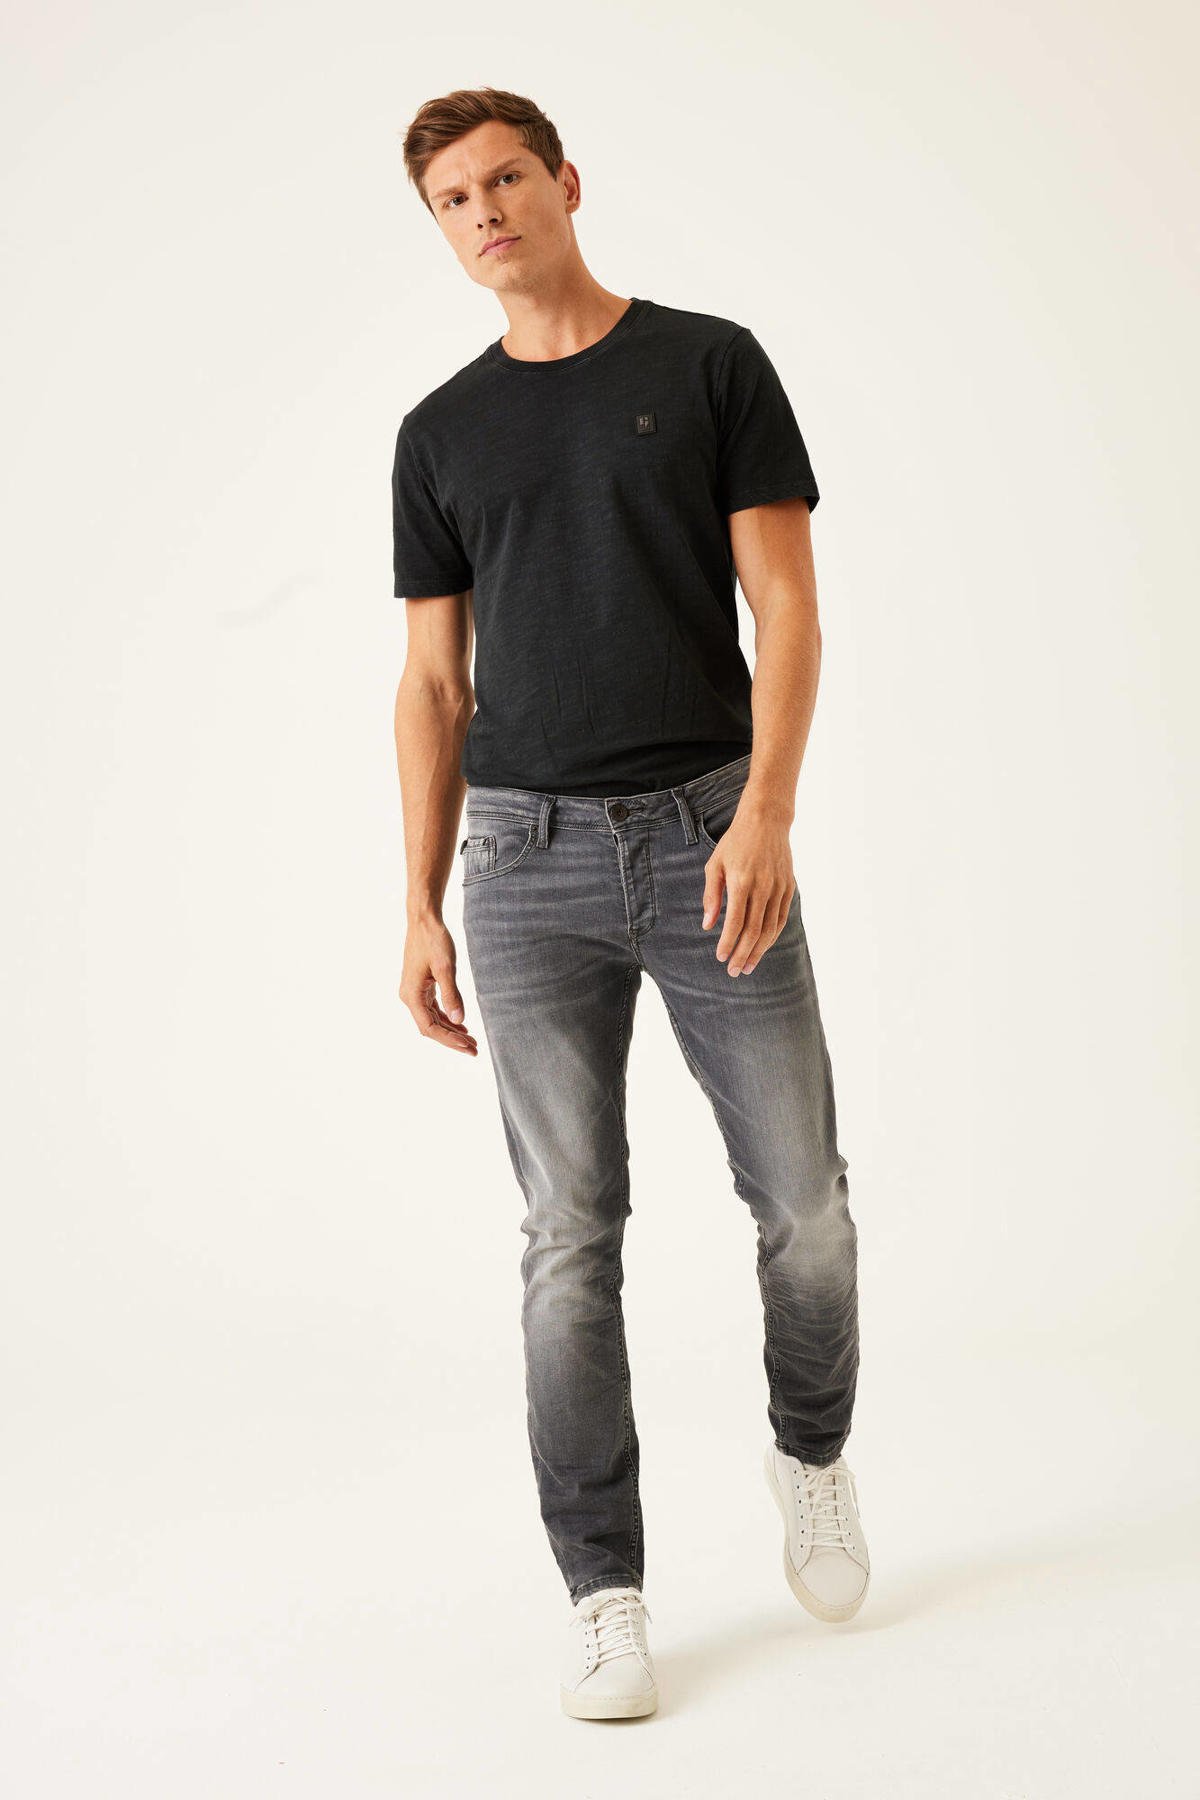 Viool Groene bonen explosie Garcia slim fit jeans Savio 630 medium used | wehkamp